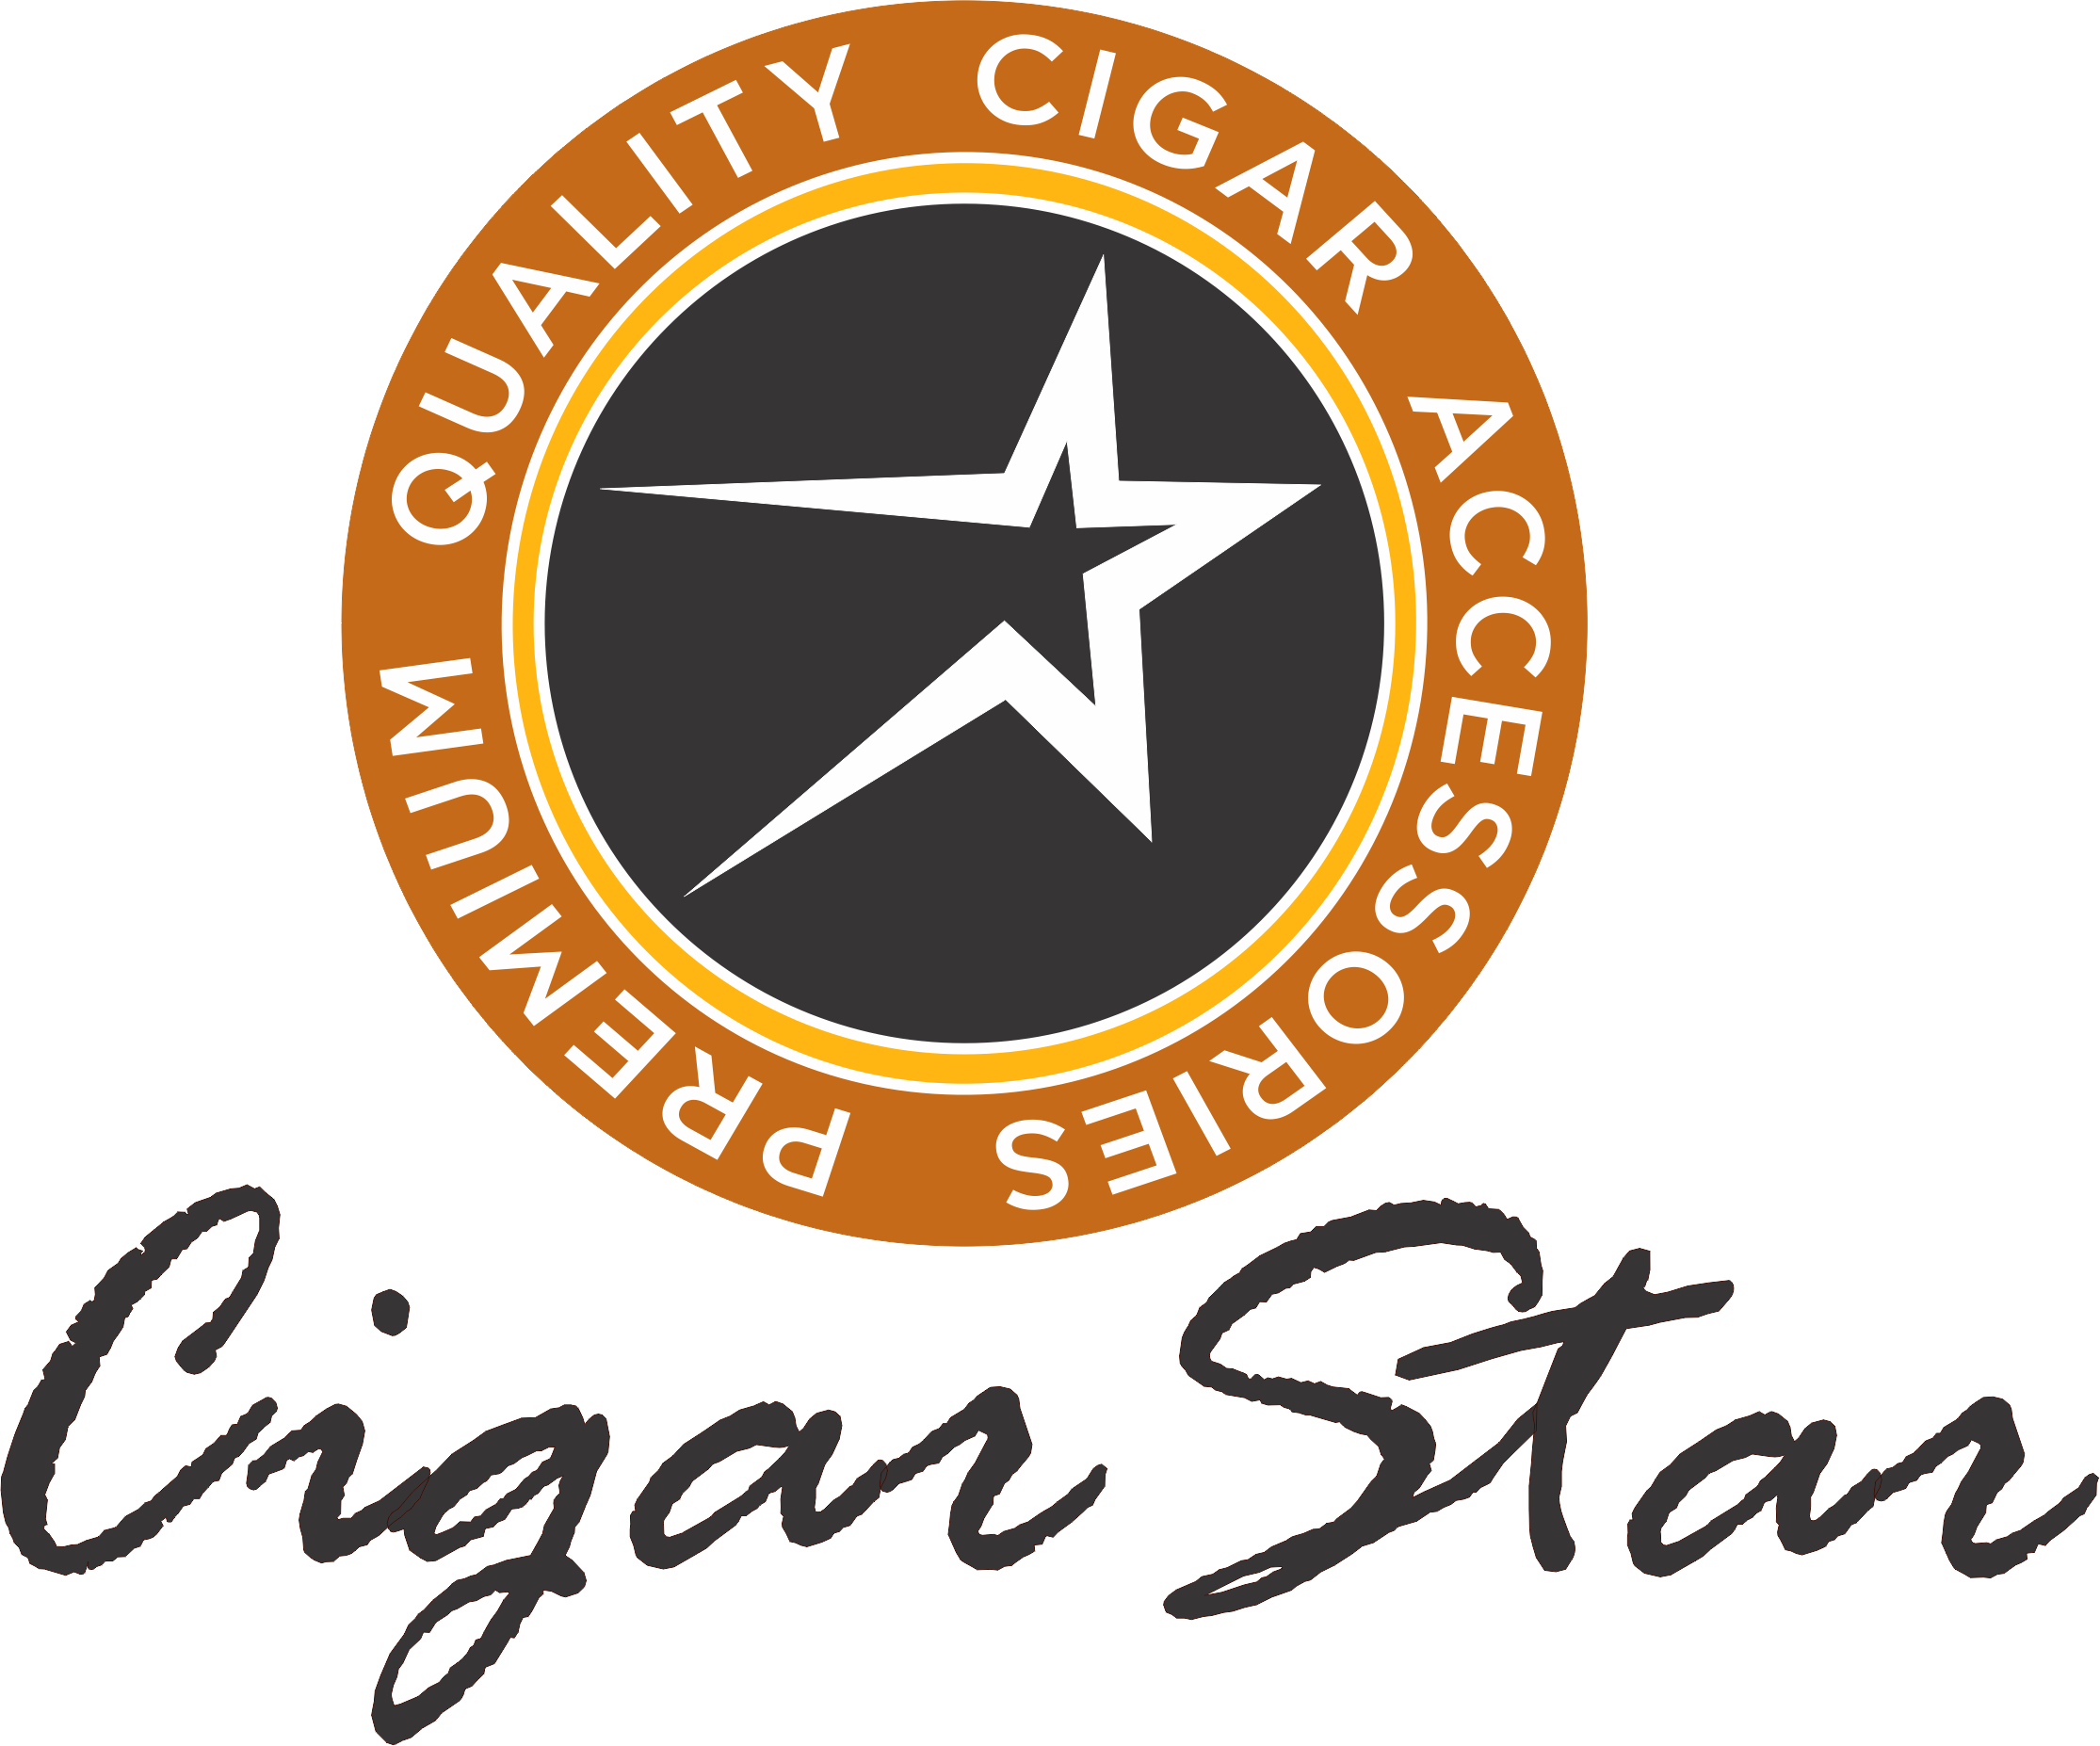 Cigar Star